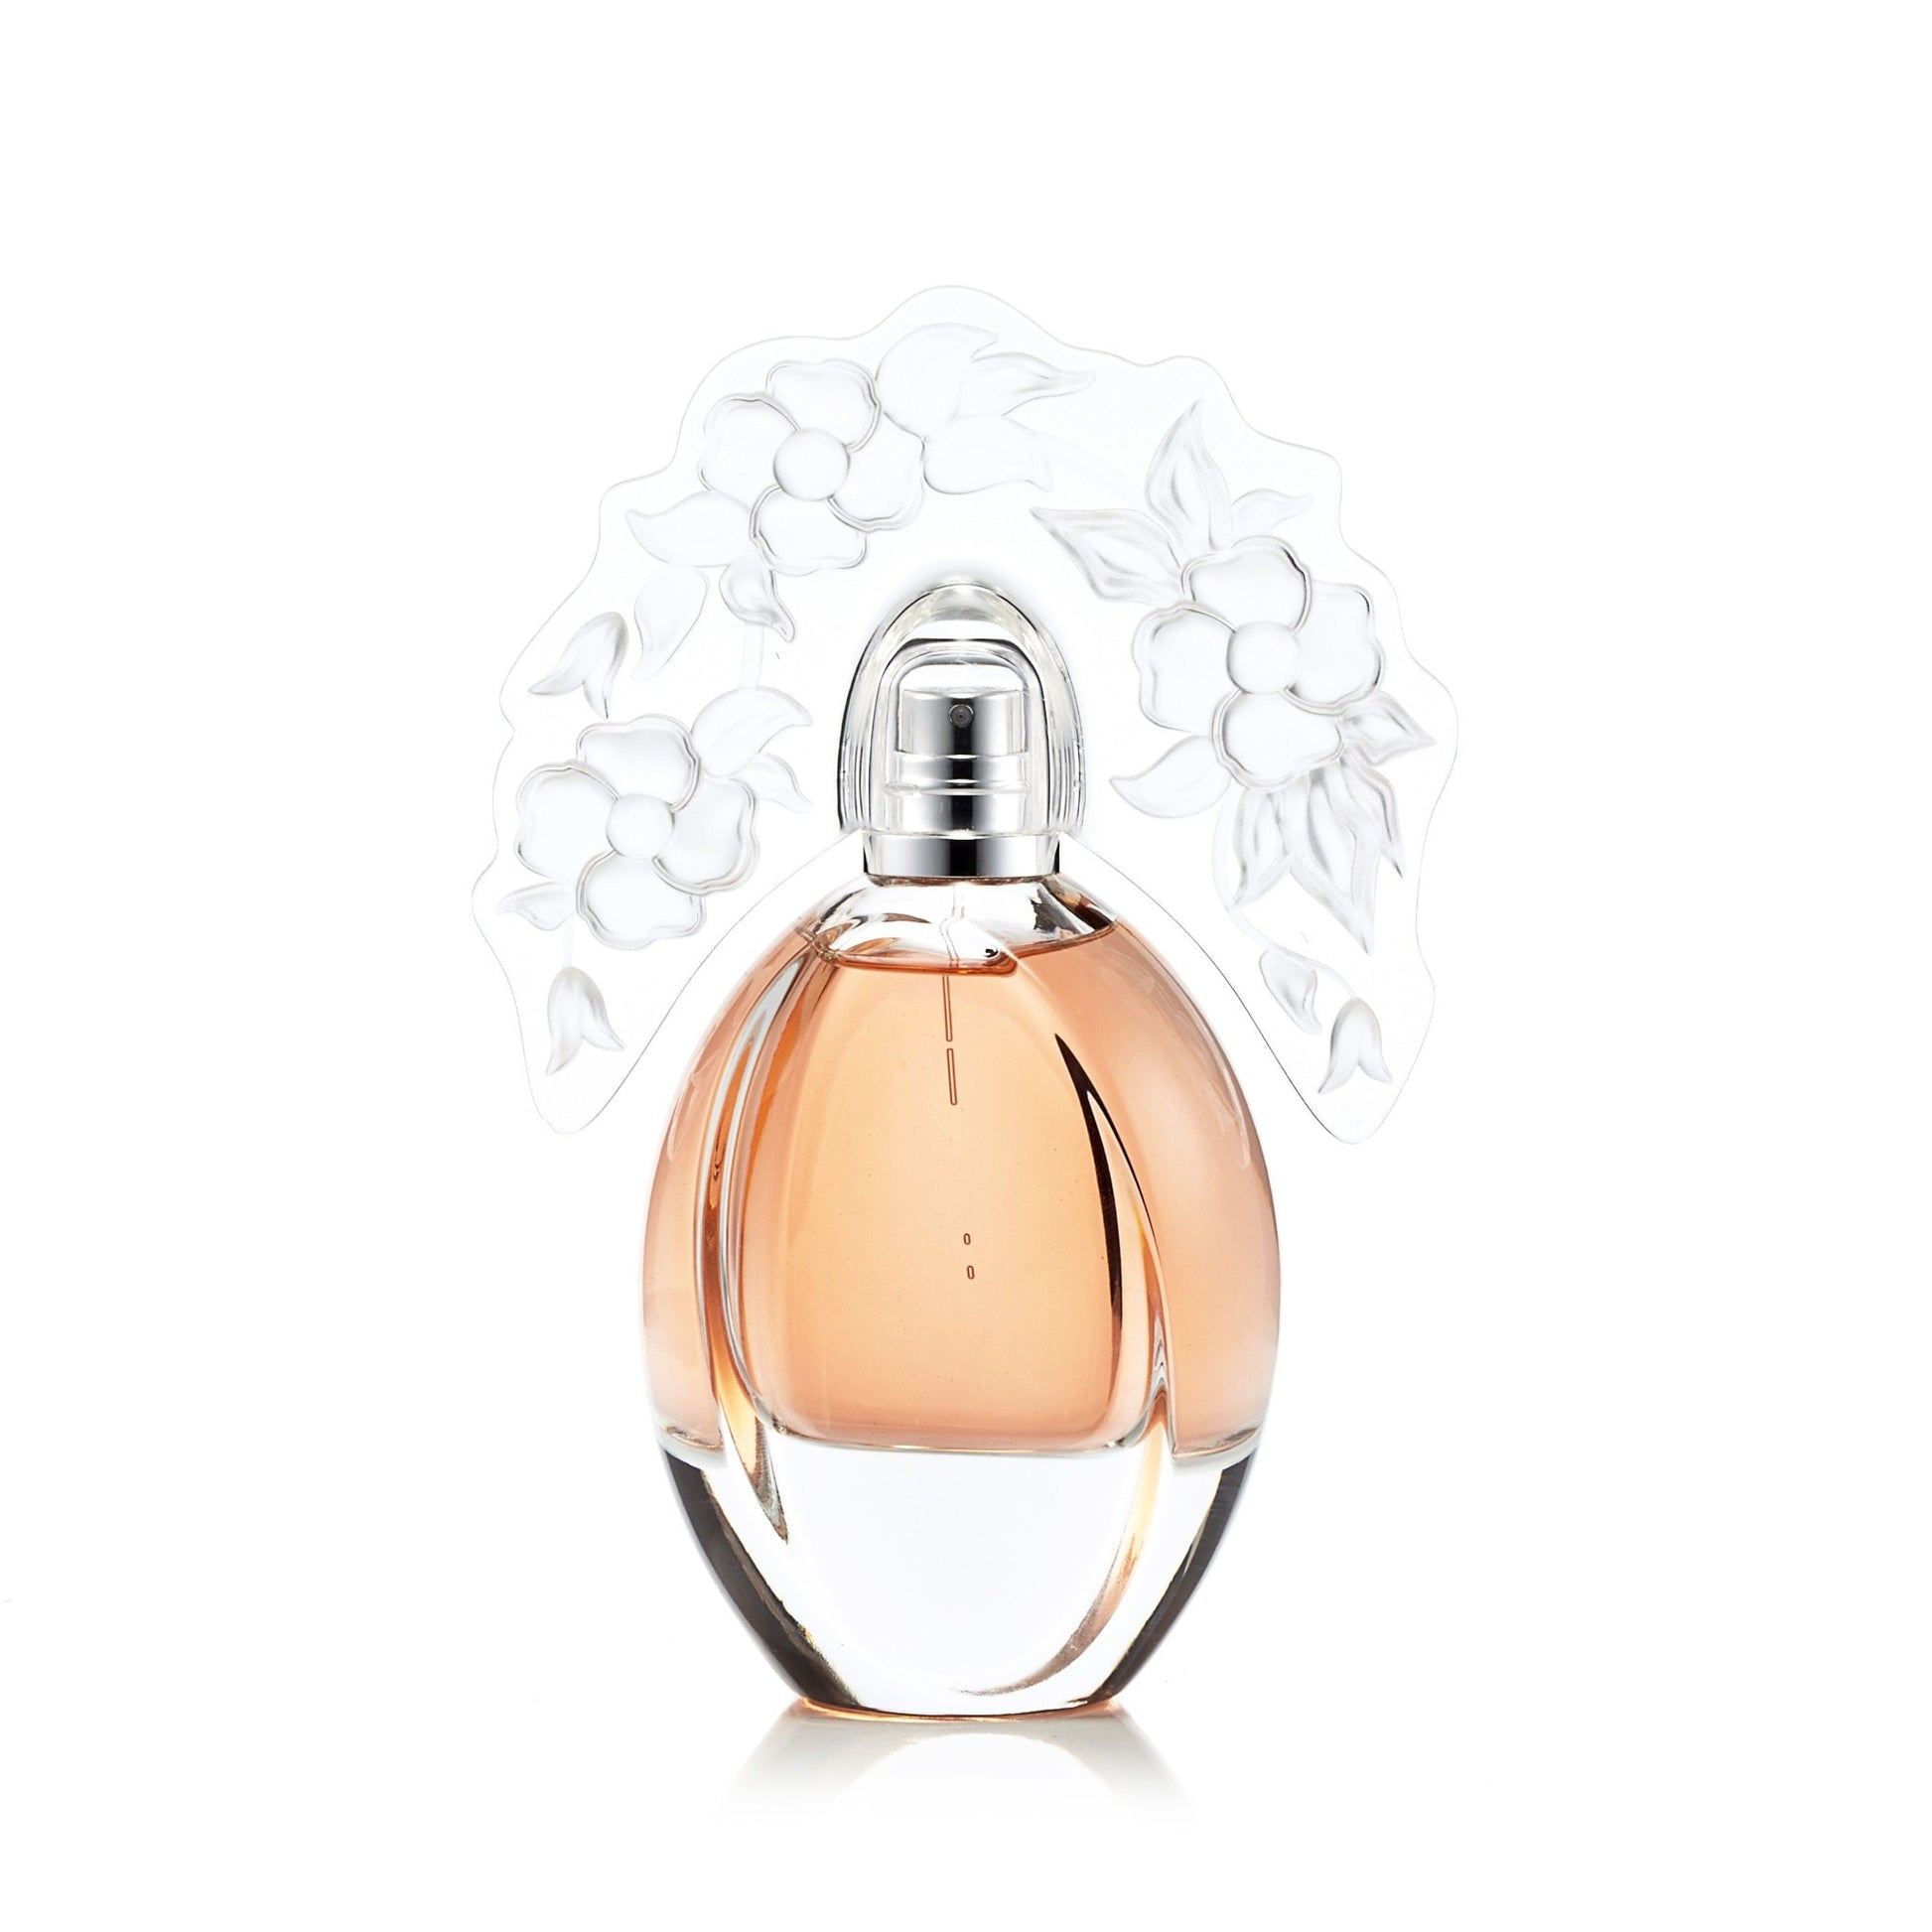 One Day In Provence Eau de Parfum Spray for Women 3.3 oz. Click to open in modal